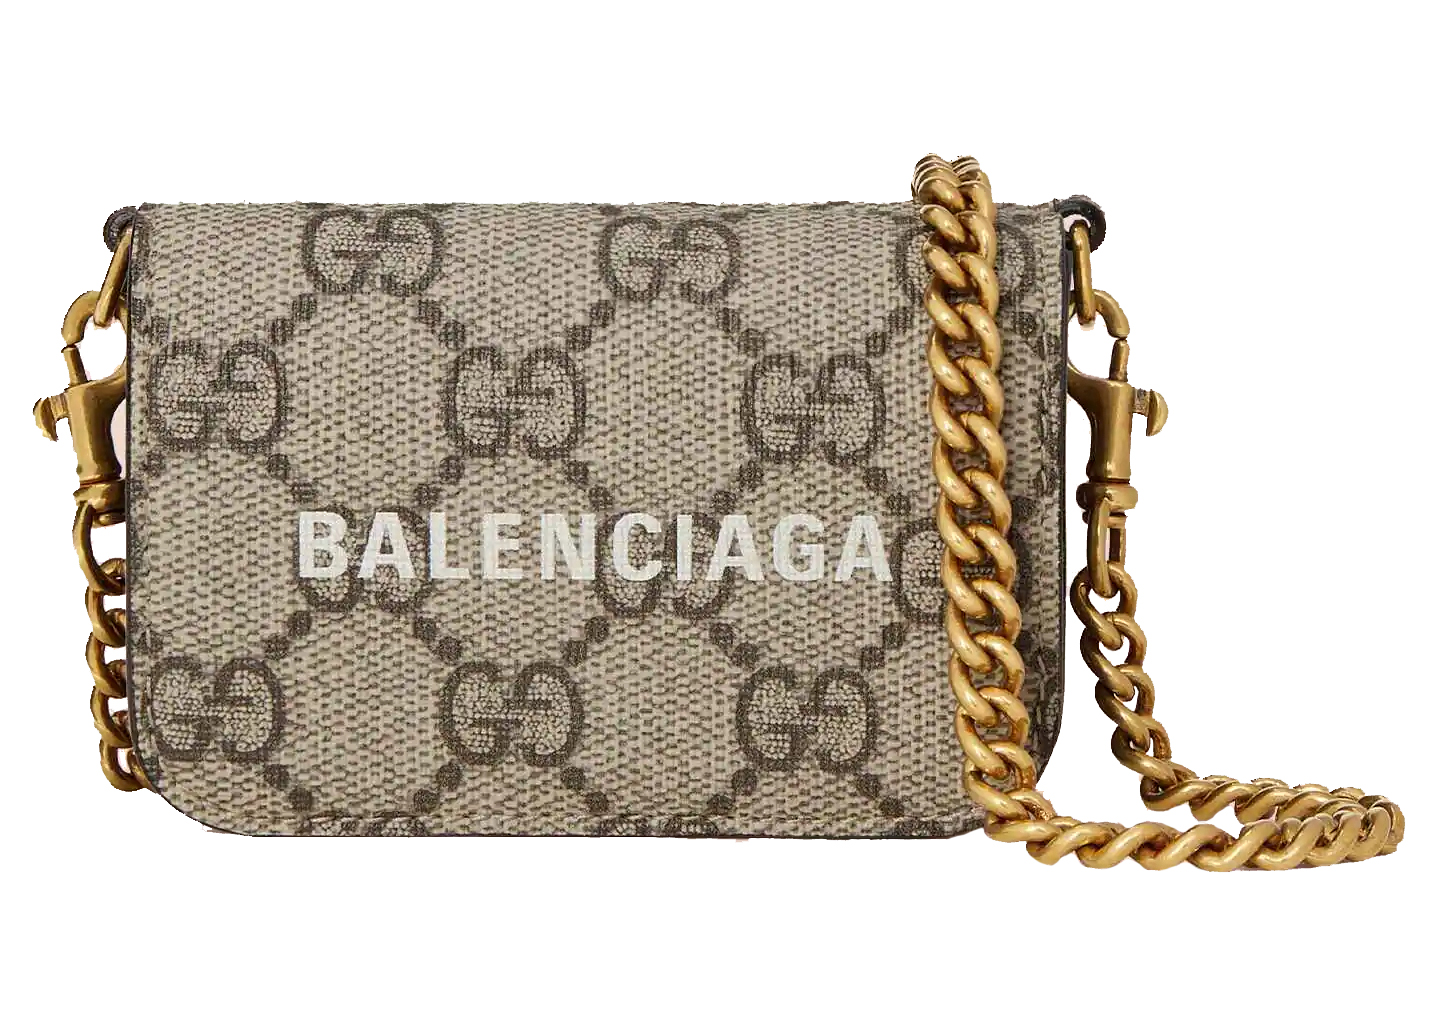 Gucci x Balenciaga The Hacker Project Wallet with Chain Beige/Ebony